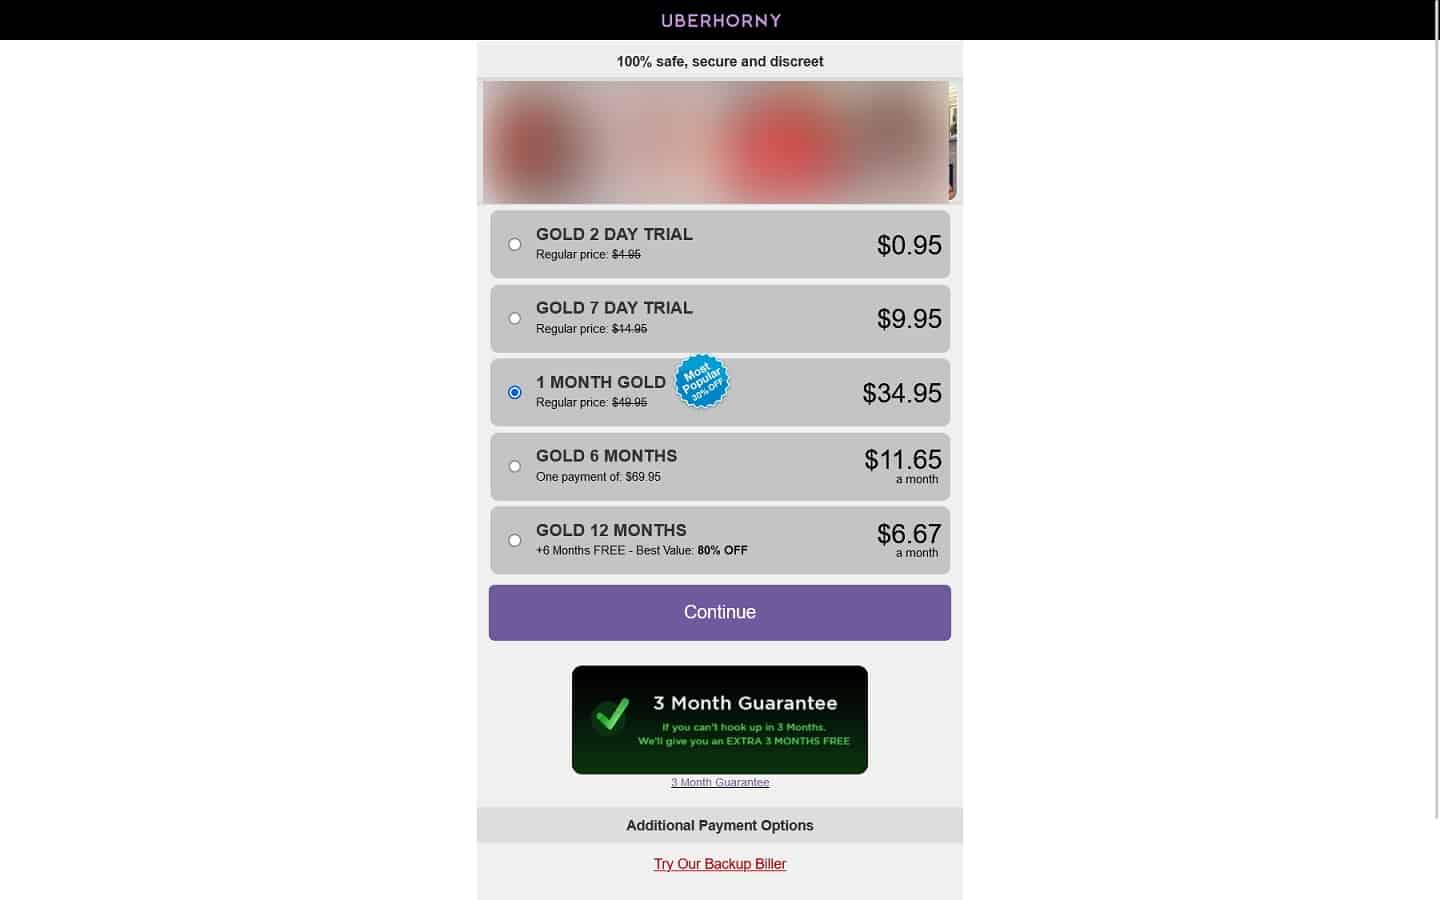 Review UberHorny.com payment